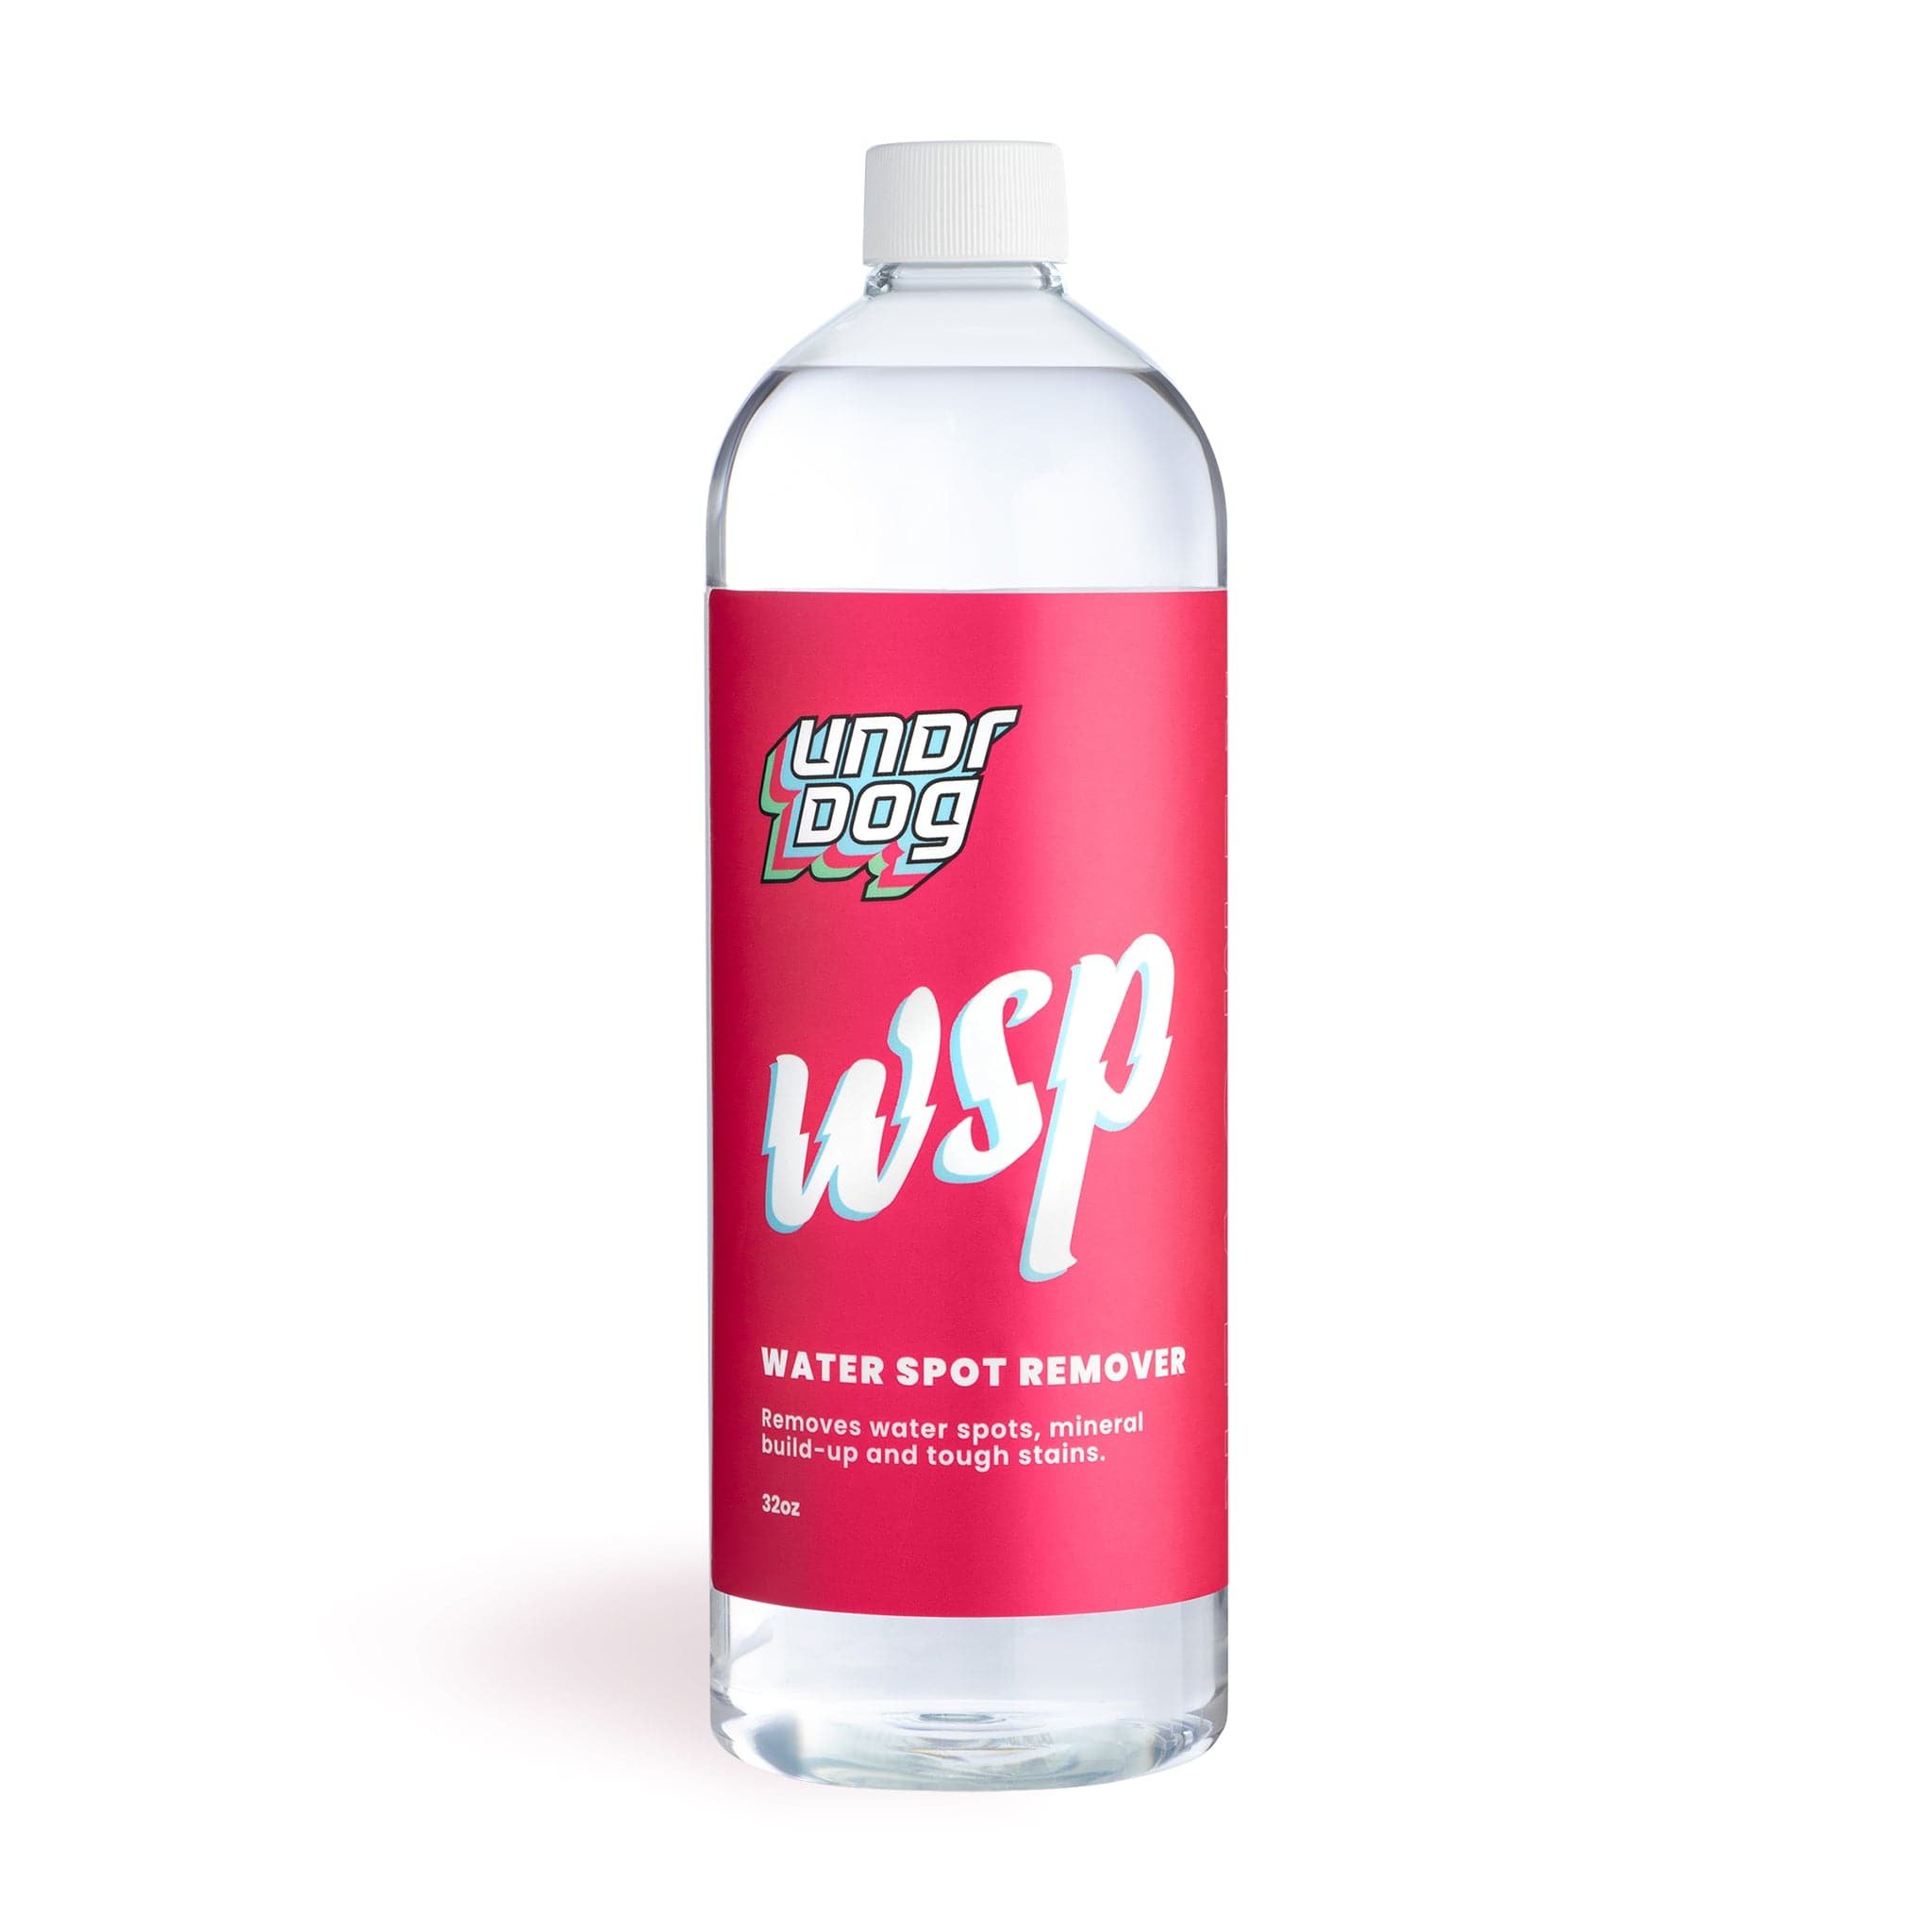 Undrdog WSP - Professional Hard Water Spot Remover